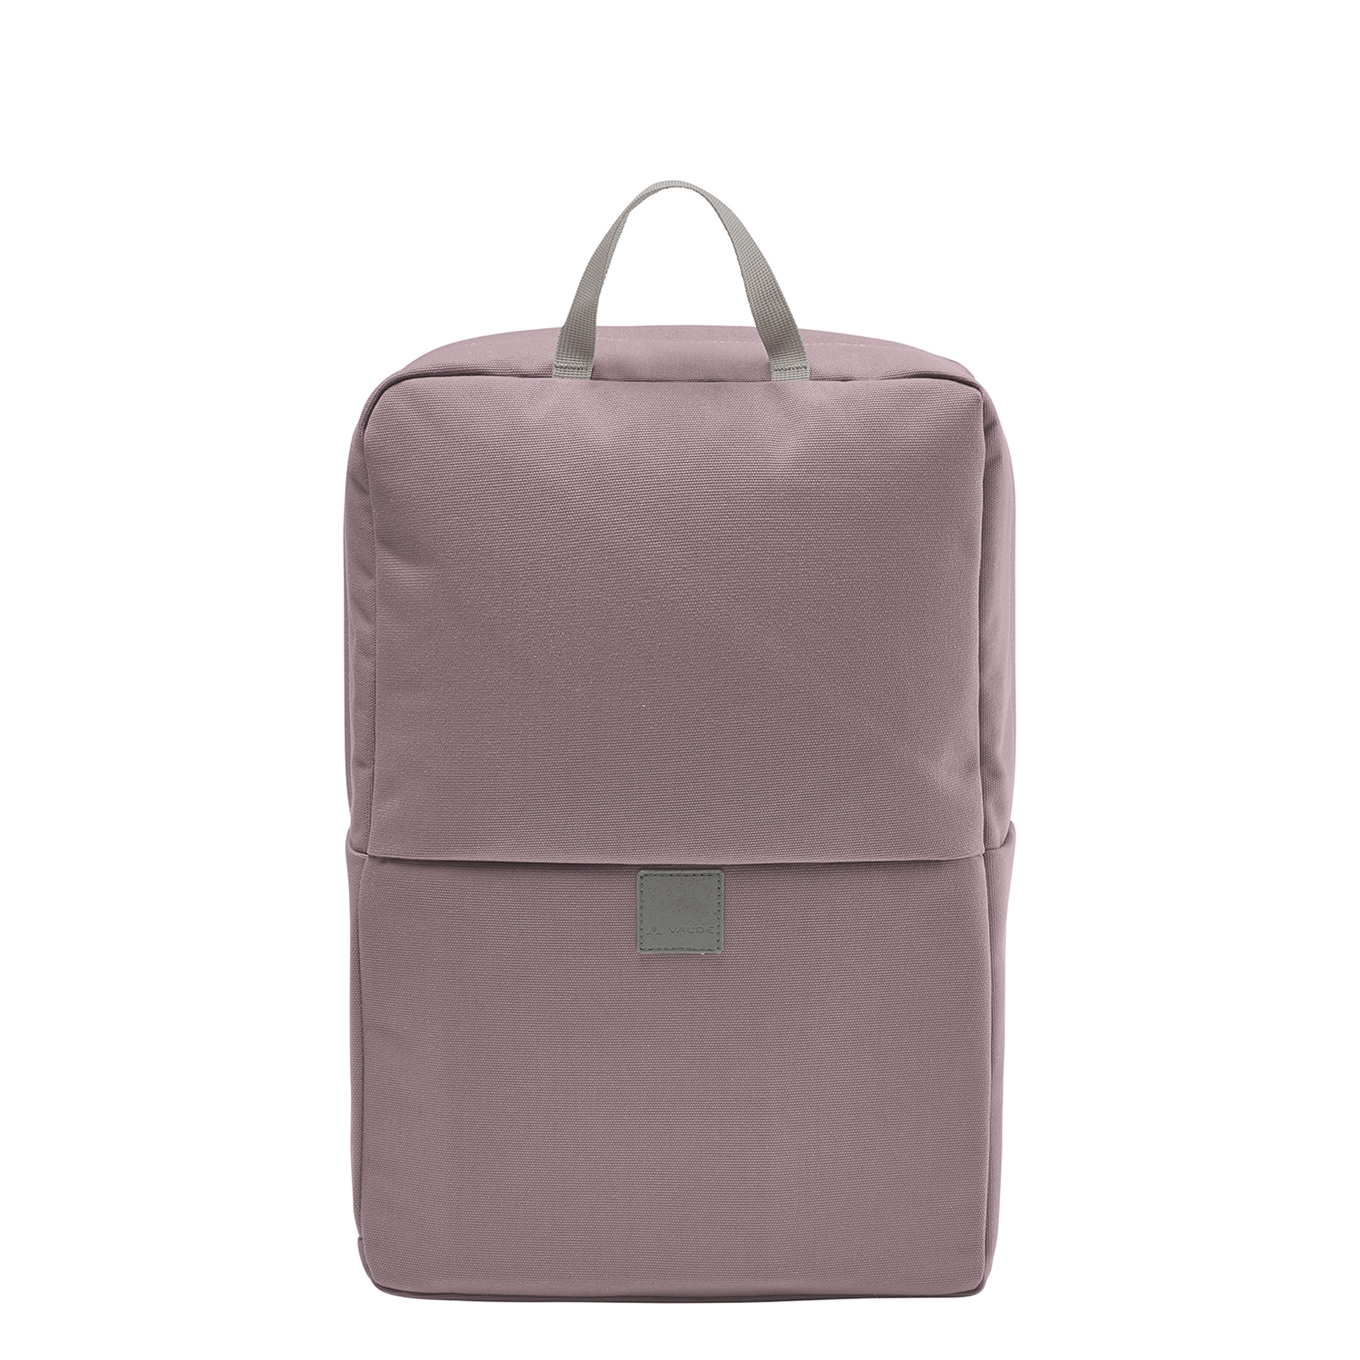 Vaude Coreway Daypack 17 lilac dusk backpack